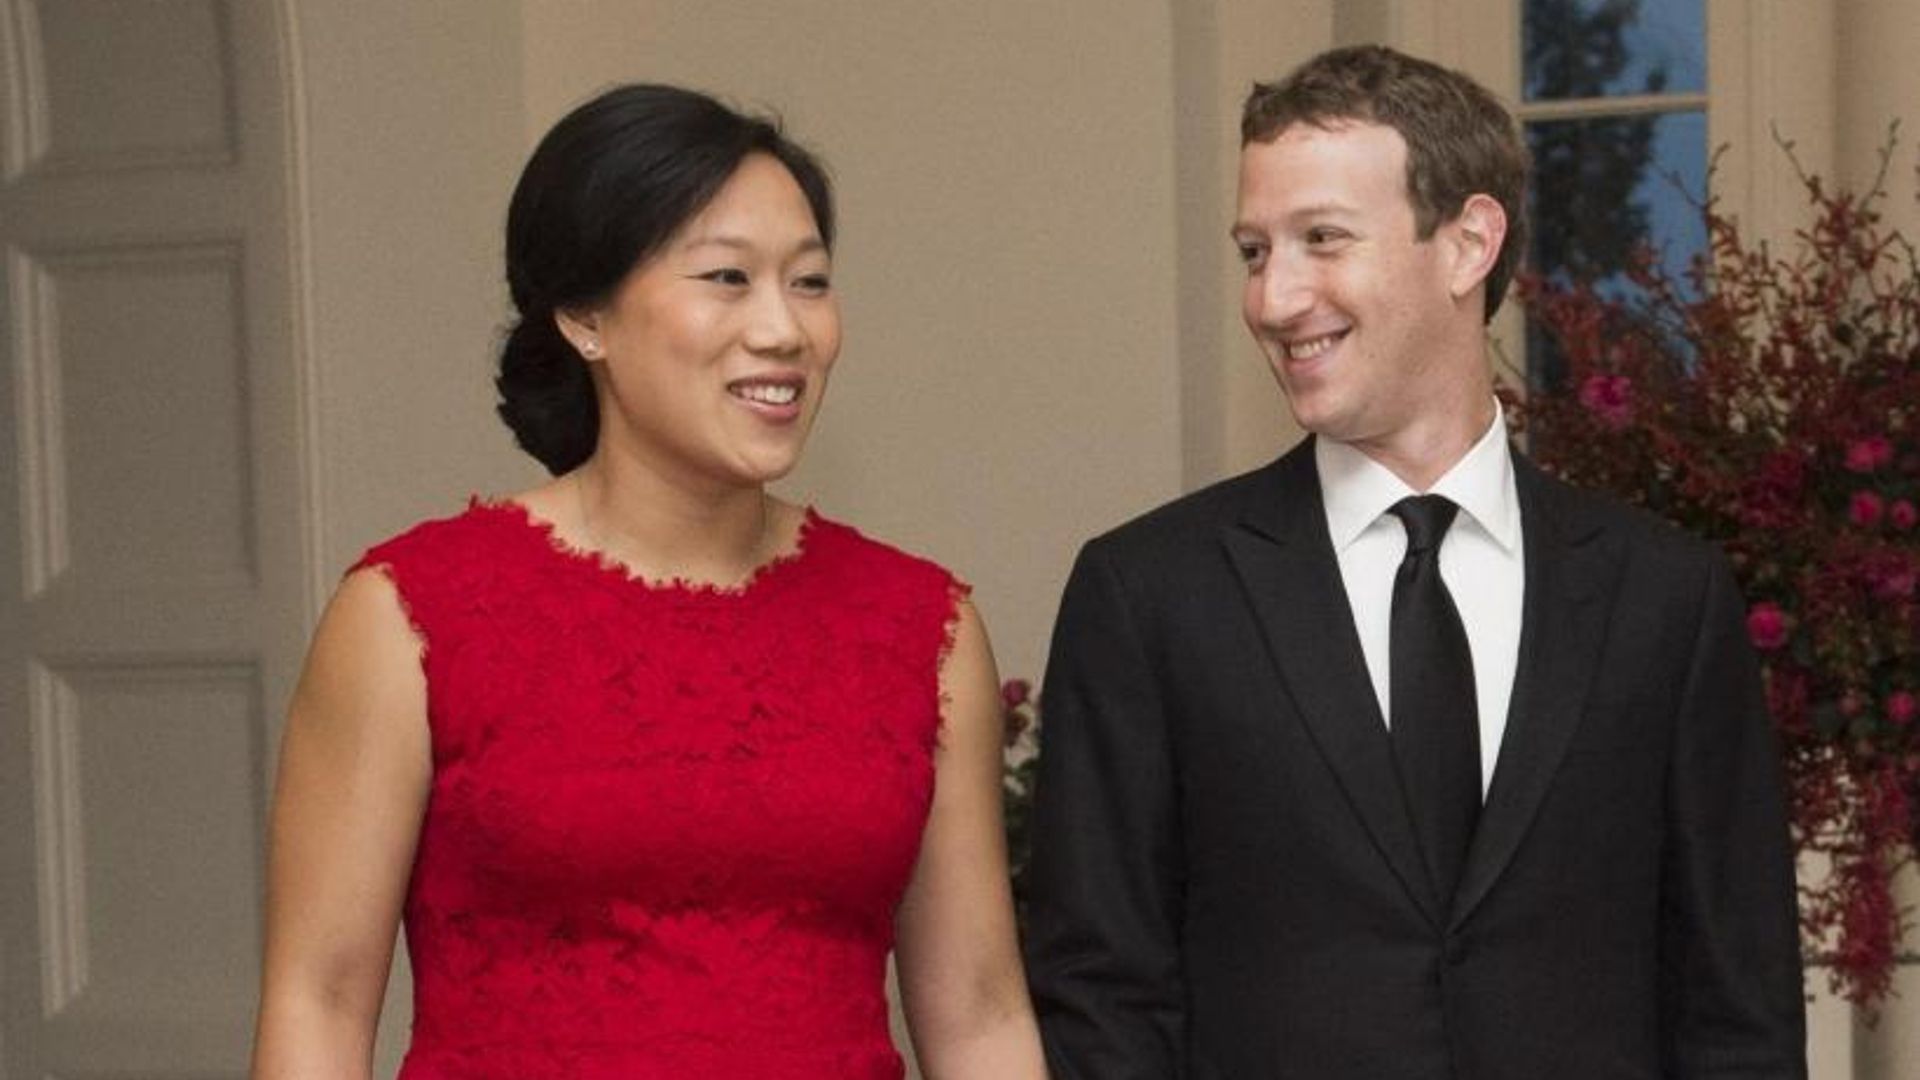 Mark Zuckerberg and wife Priscilla Chan welcome second daughter